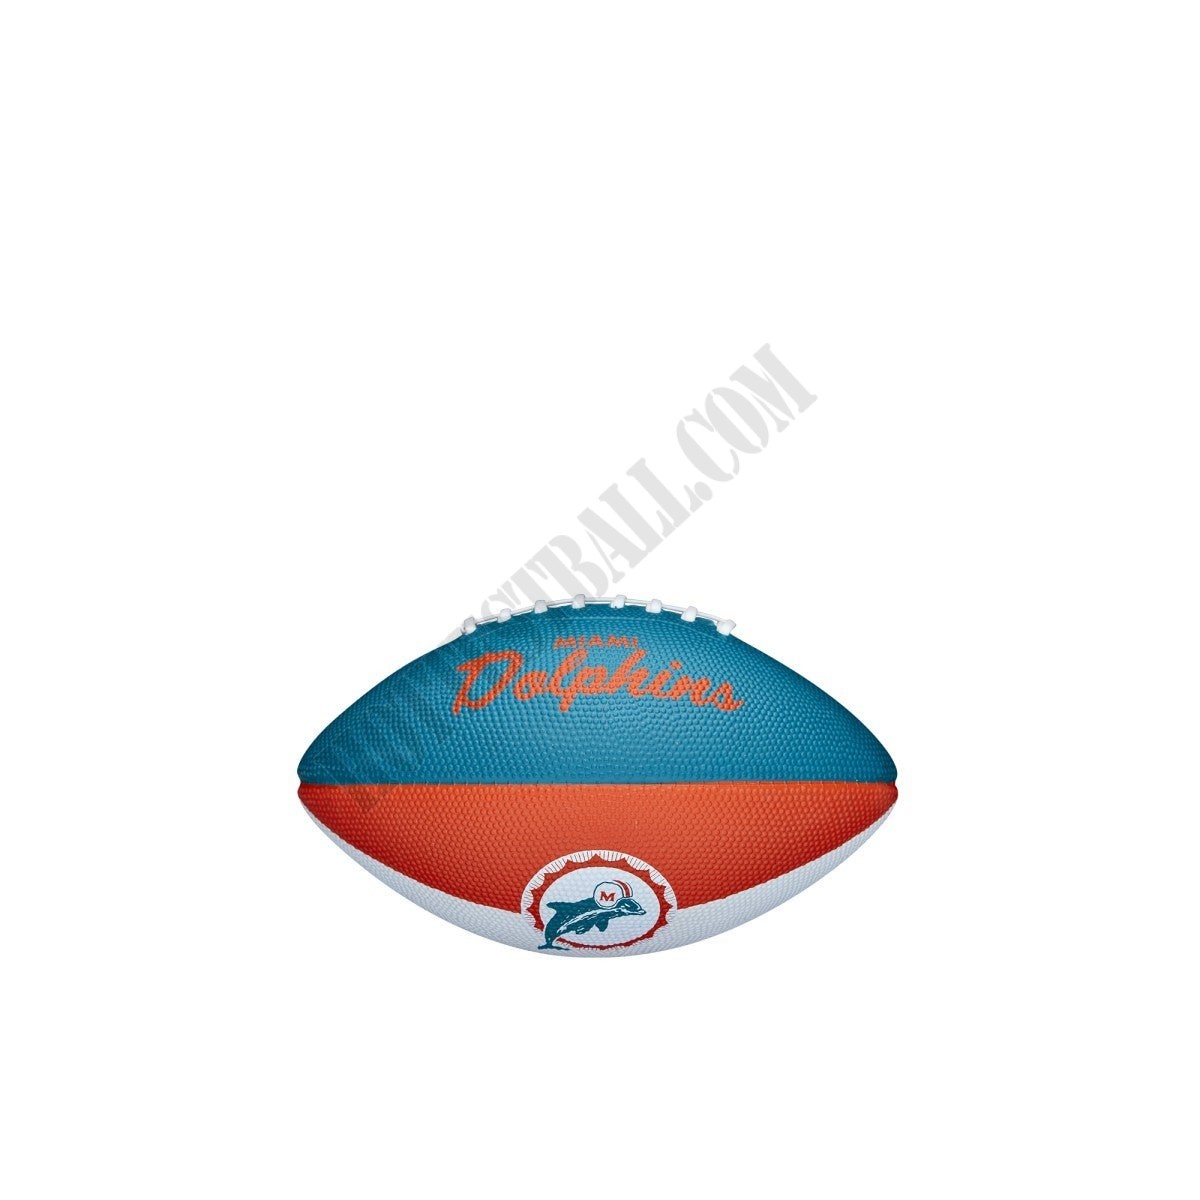 NFL Retro Mini Football - Miami Dolphins ● Wilson Promotions - -4